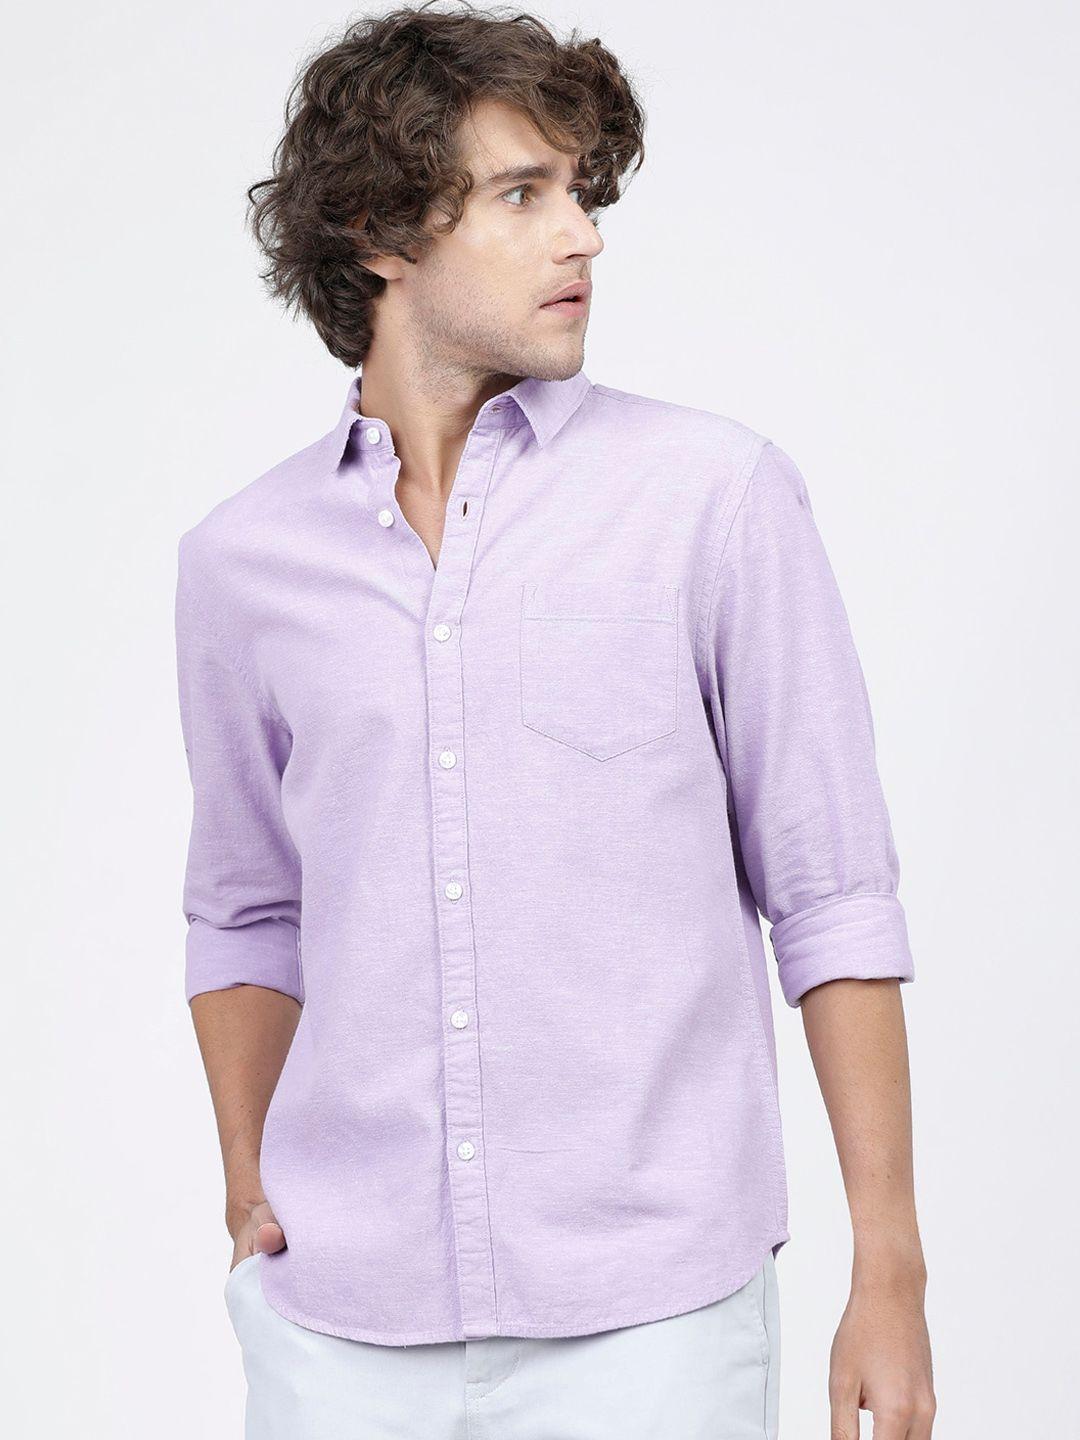 ketch-men-lavender-slim-fit-opaque-casual-shirt